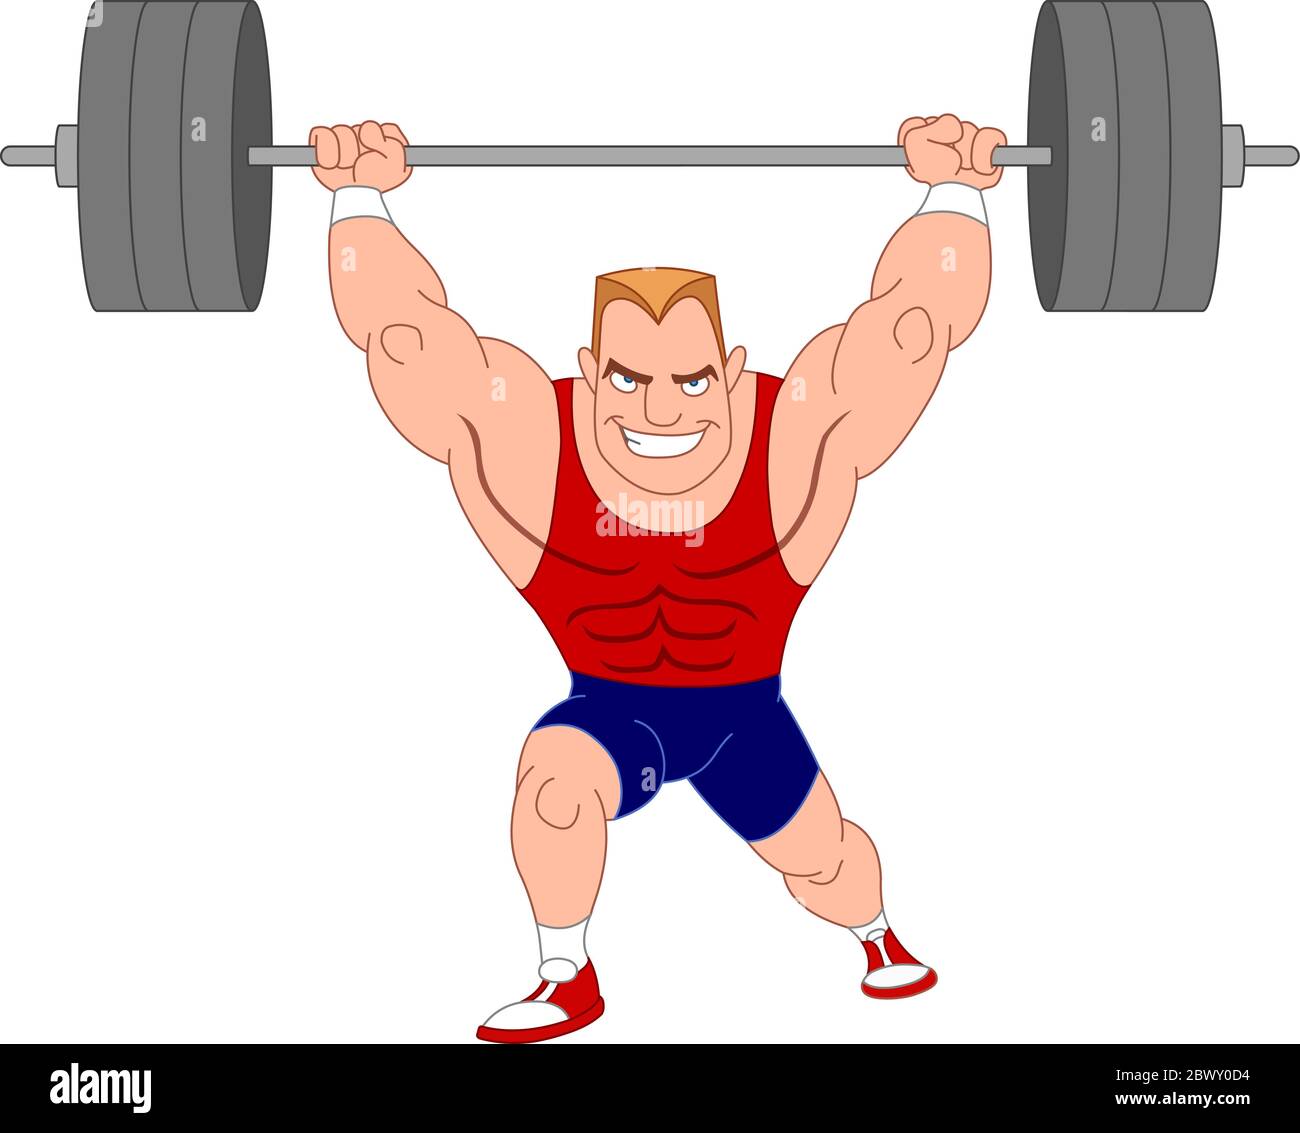 https://c8.alamy.com/comp/2BWY0D4/weightlifter-bodybuilder-lifting-barbell-2BWY0D4.jpg